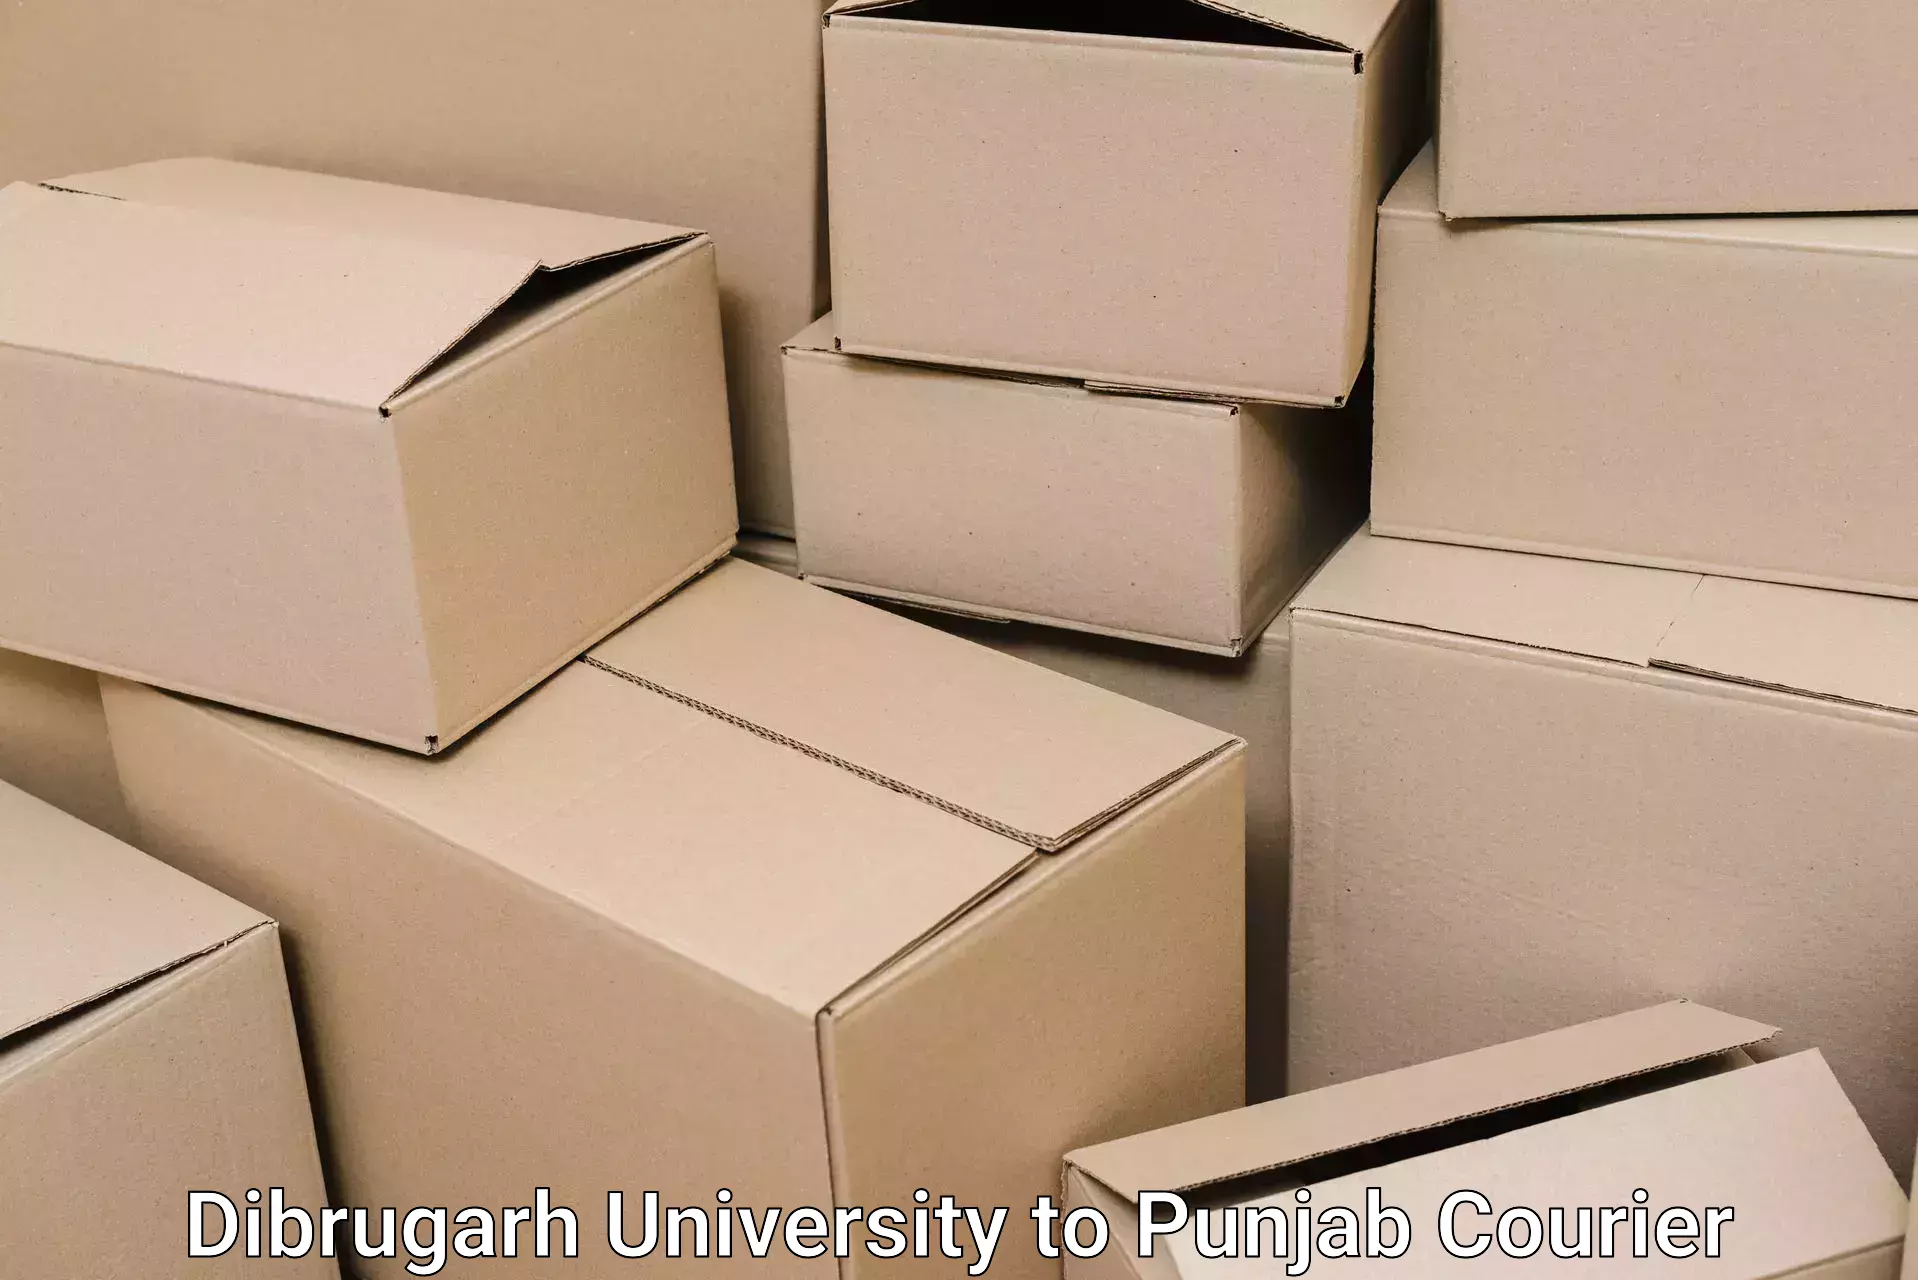 Furniture moving assistance Dibrugarh University to Zirakpur